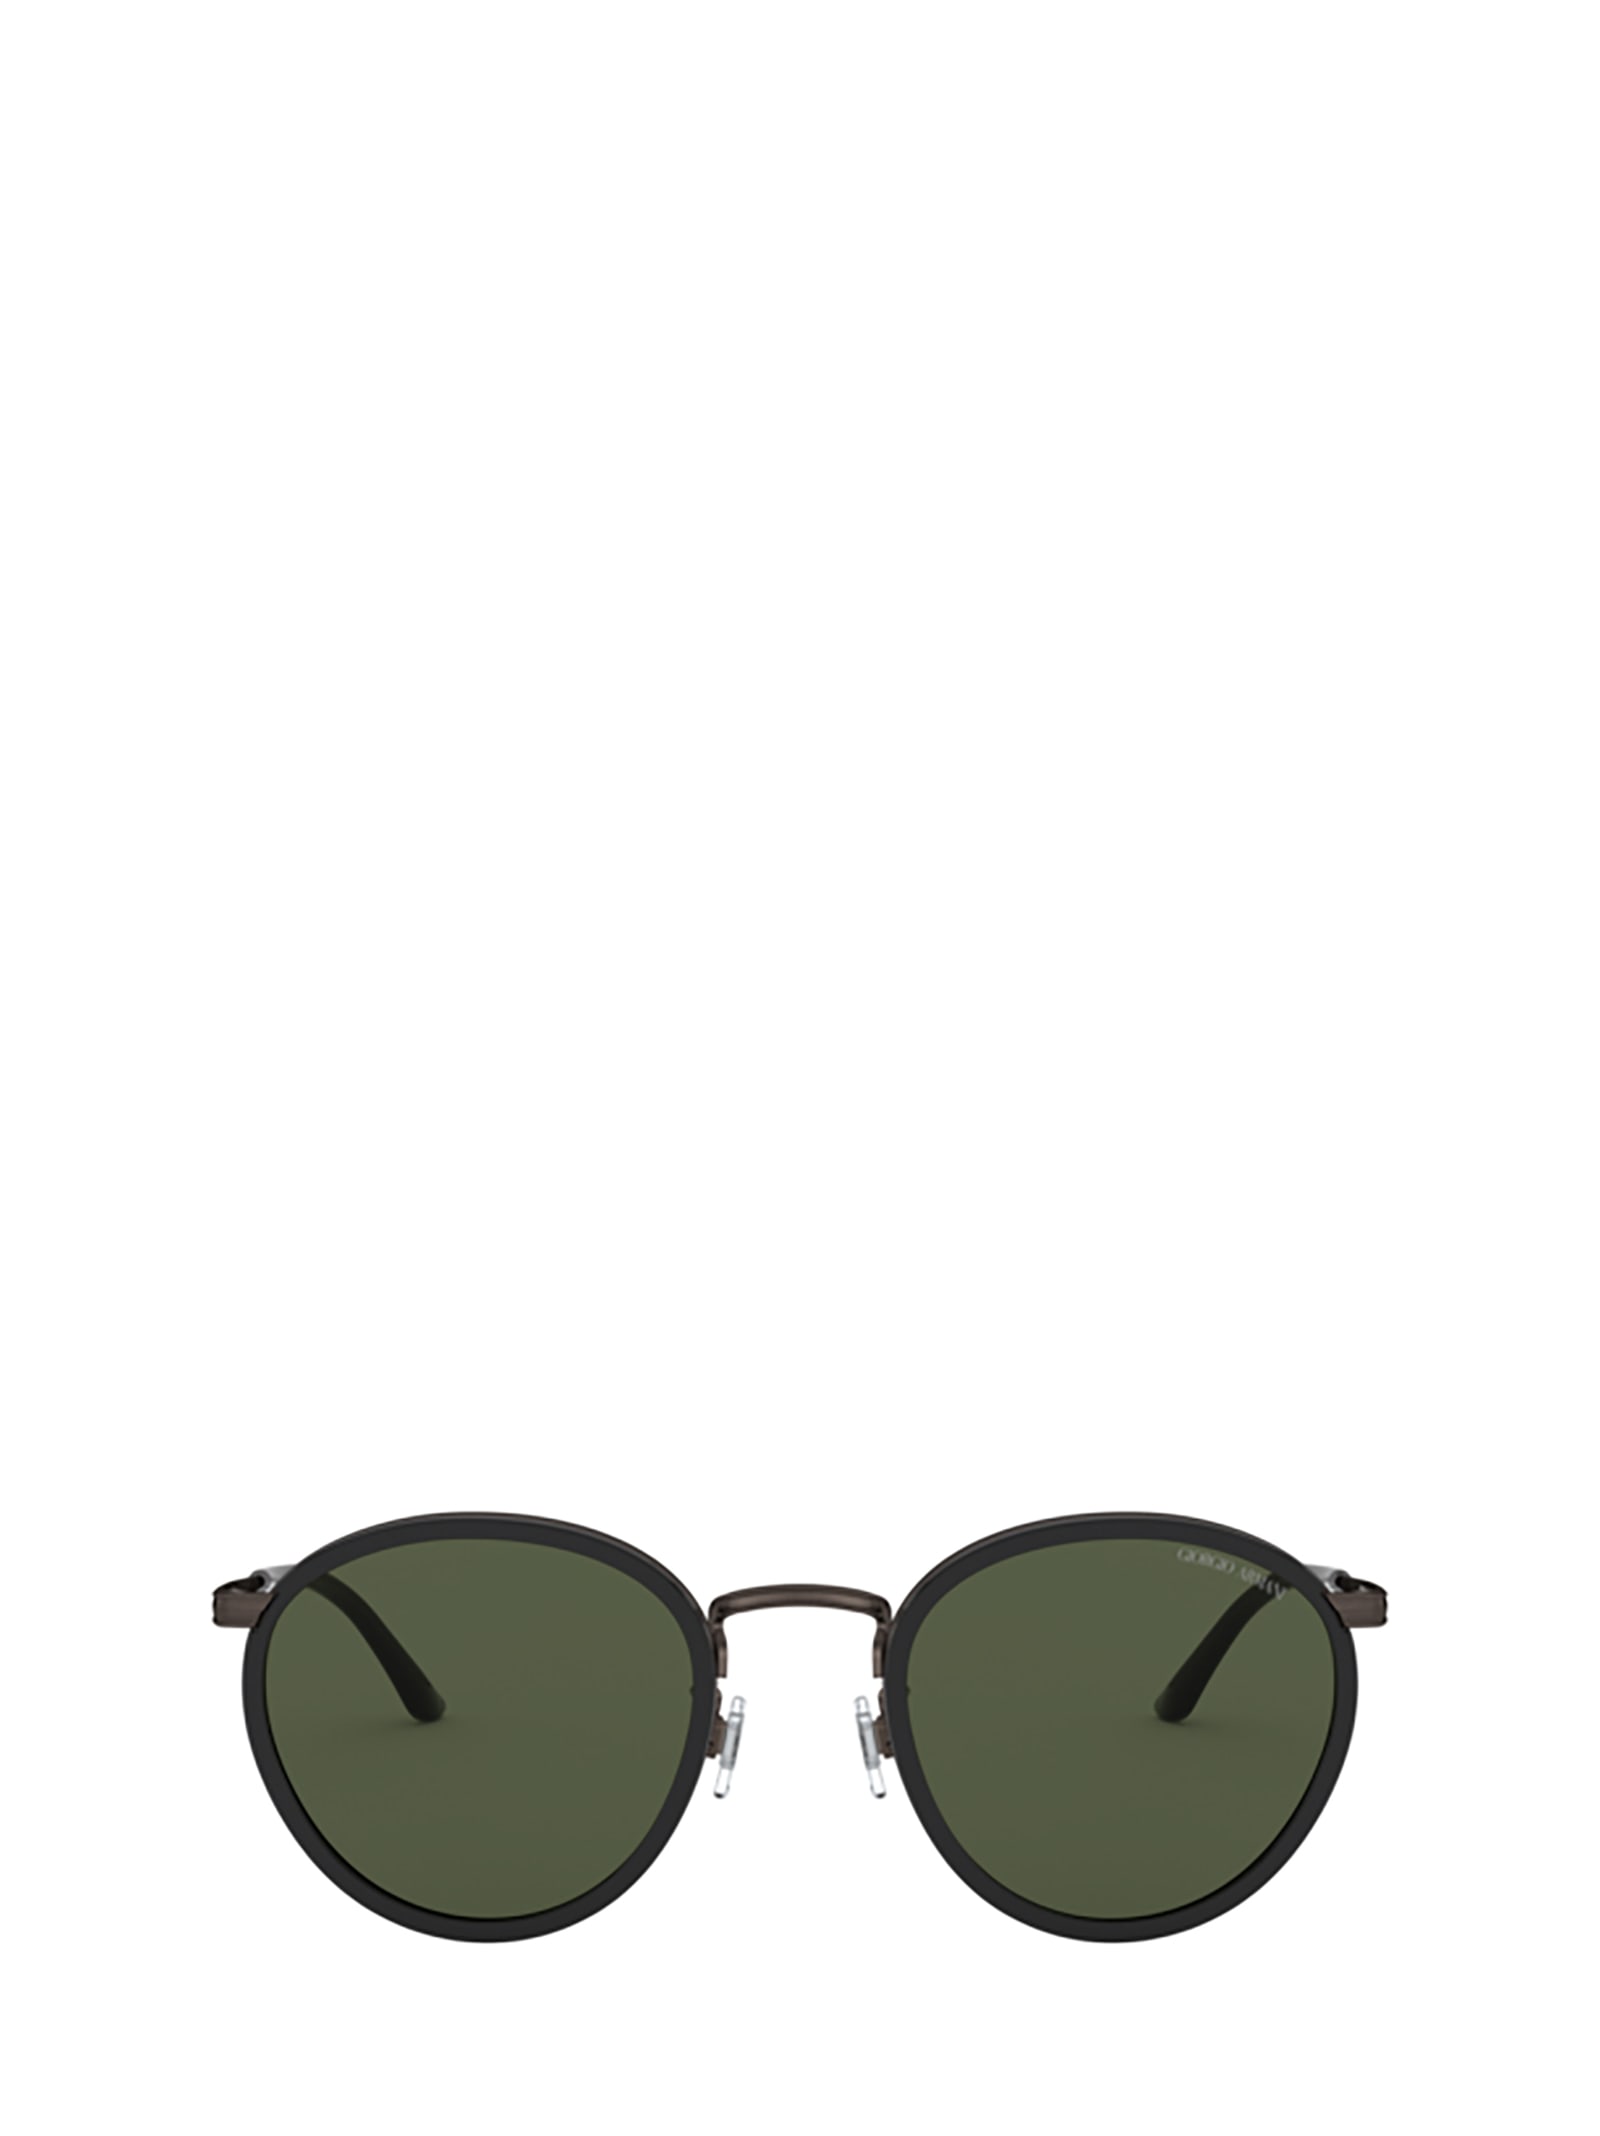 Giorgio Armani Giorgio Armani Ar 101m Black Sunglasses